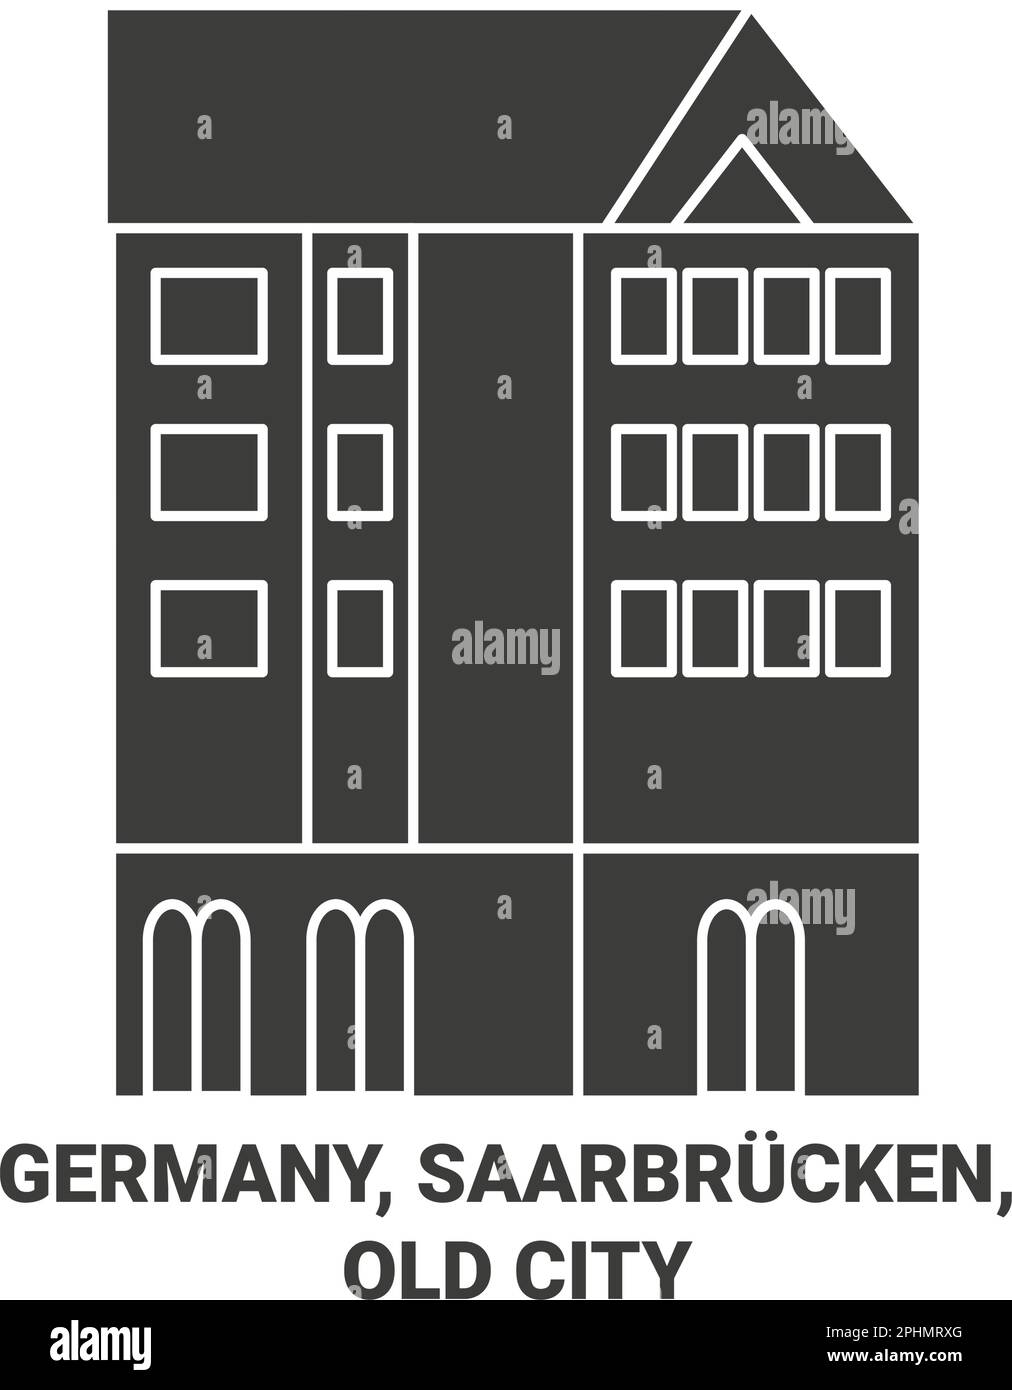 Germany, Saarbrucken, Travels Landsmark travel landmark vector illustration Stock Vector